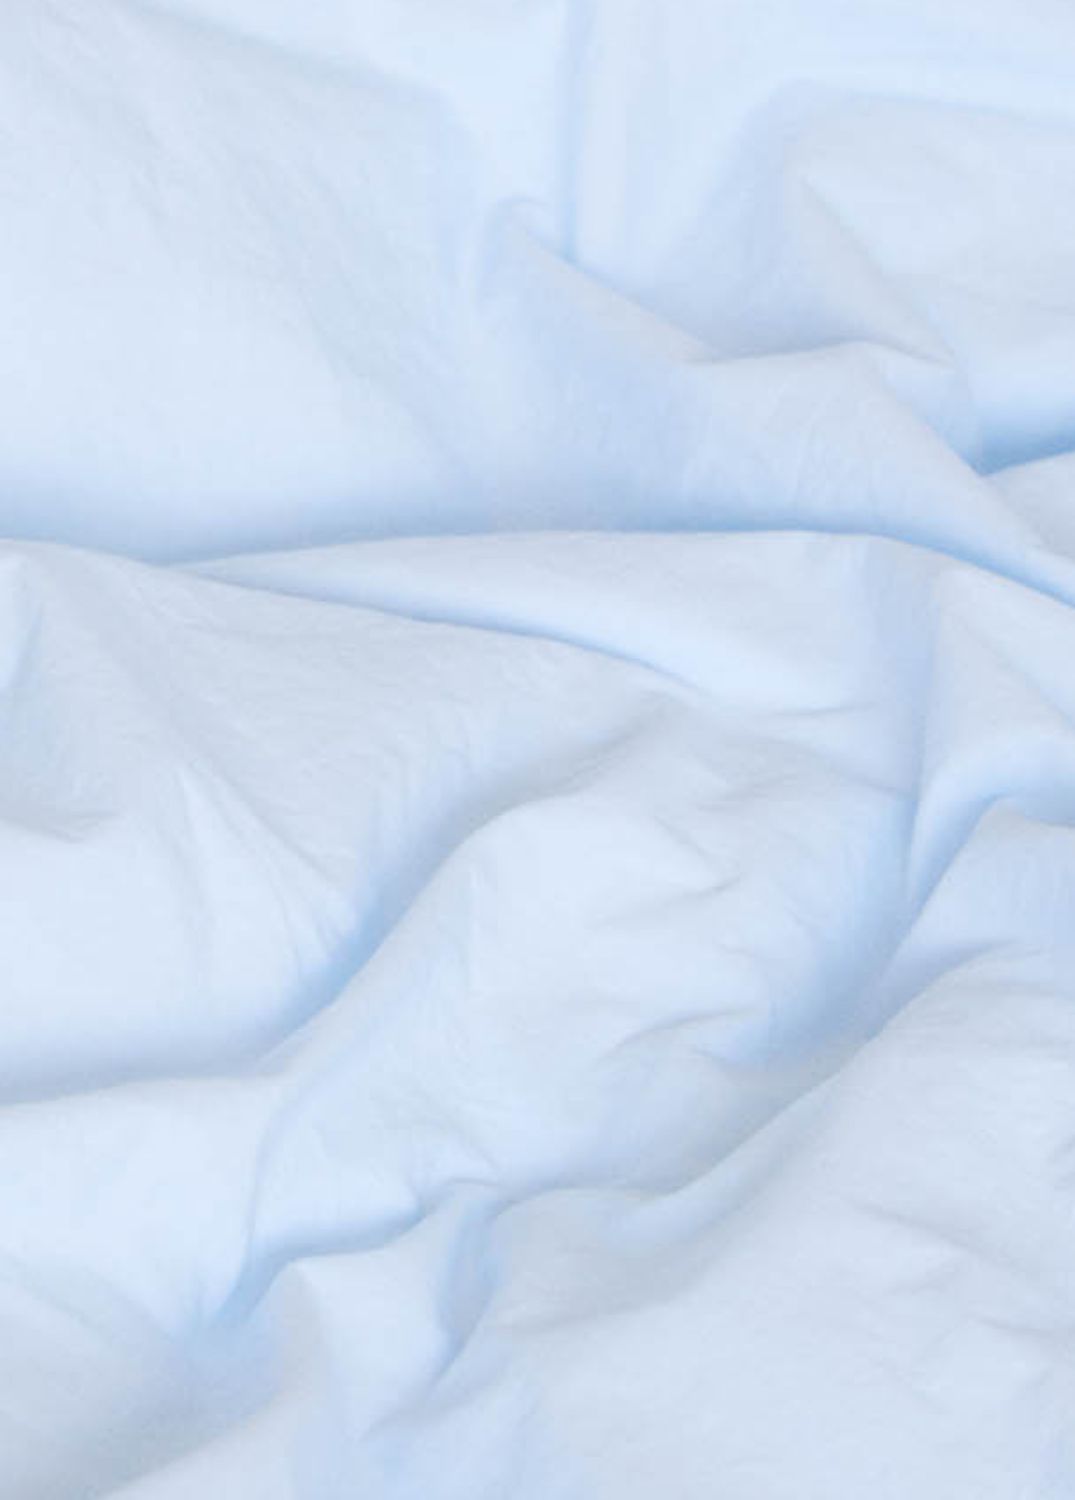 Cotton percale baby/junior Bedding set - Light blue